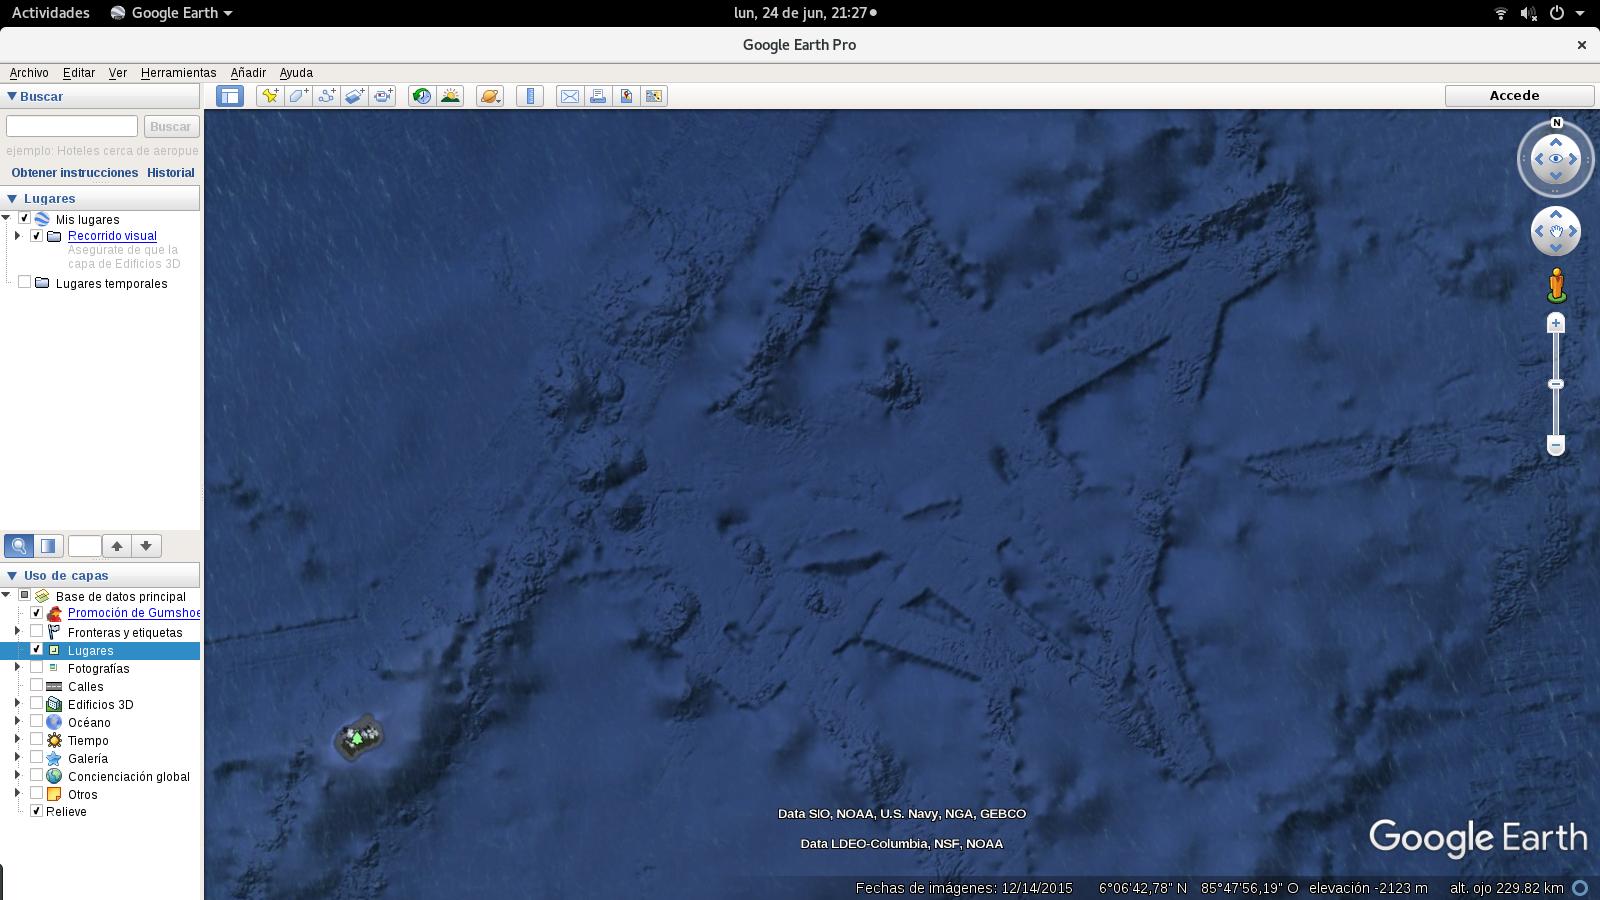 underwater images google earthview coordinates